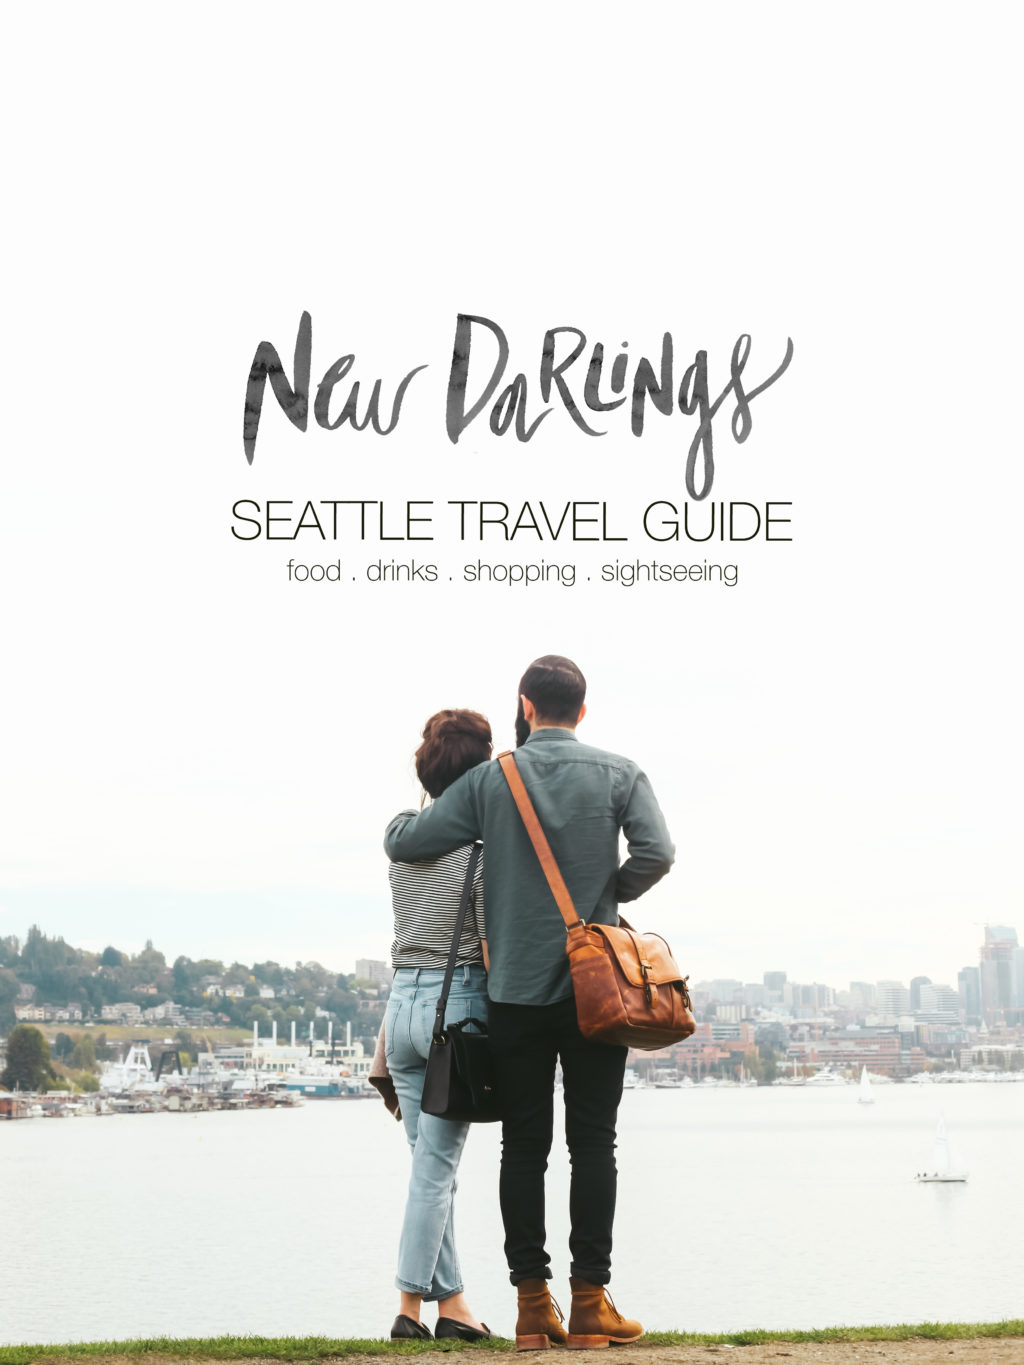 New Darlings - Seattle Travel Guide